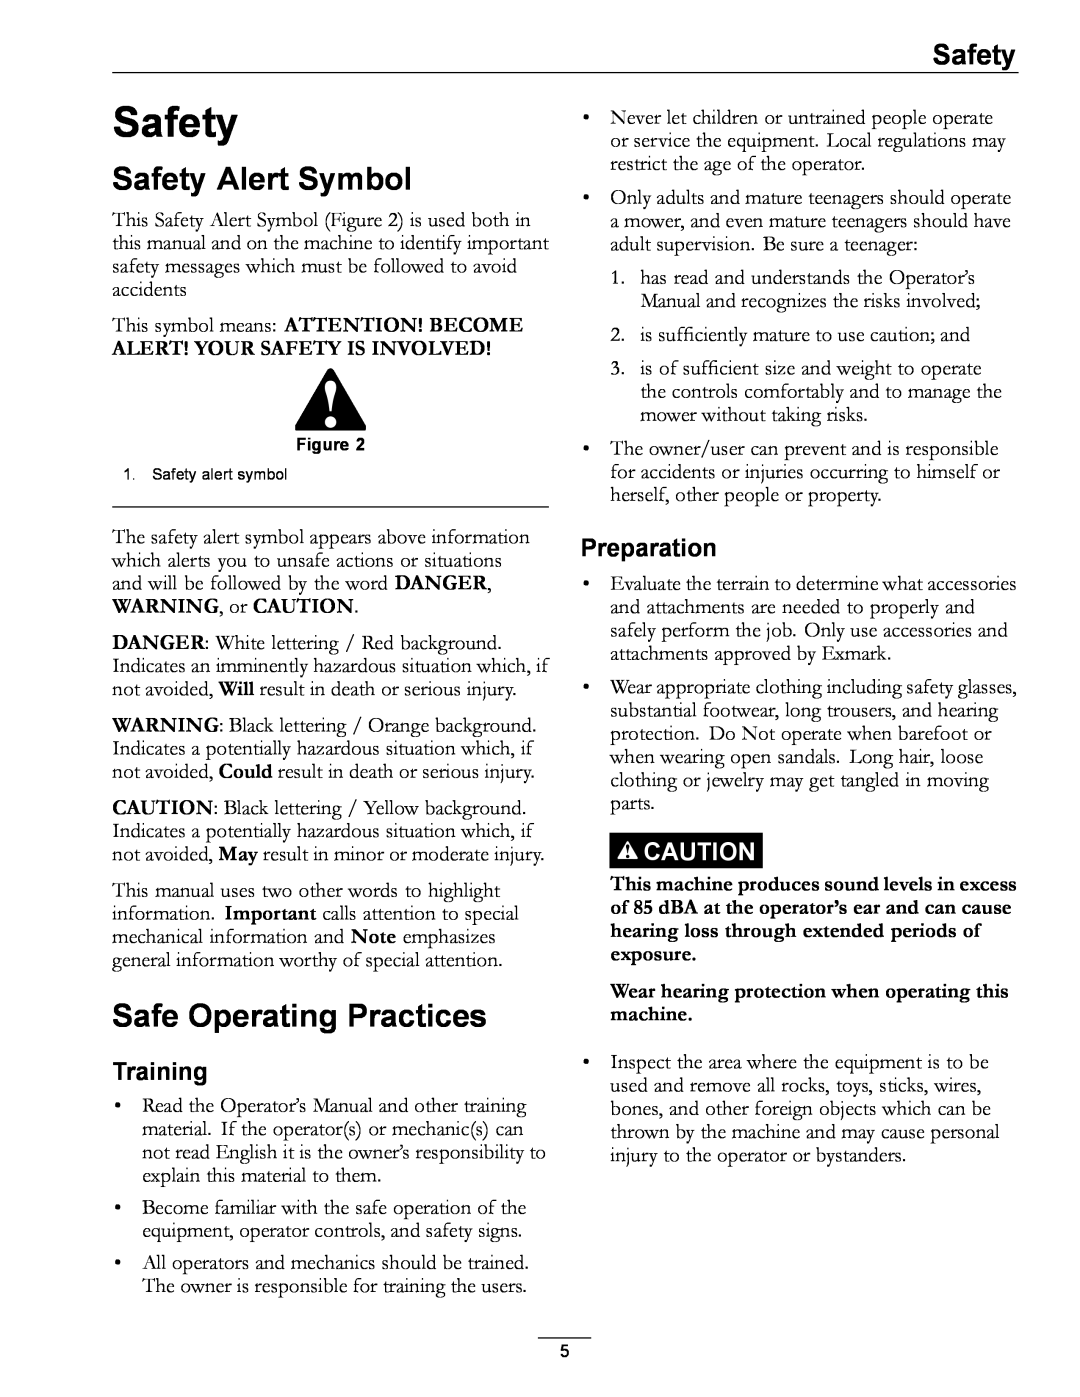 Exmark 00 & Higher, 850 manual Safety Alert Symbol, Safe Operating Practices, Training, Preparation 